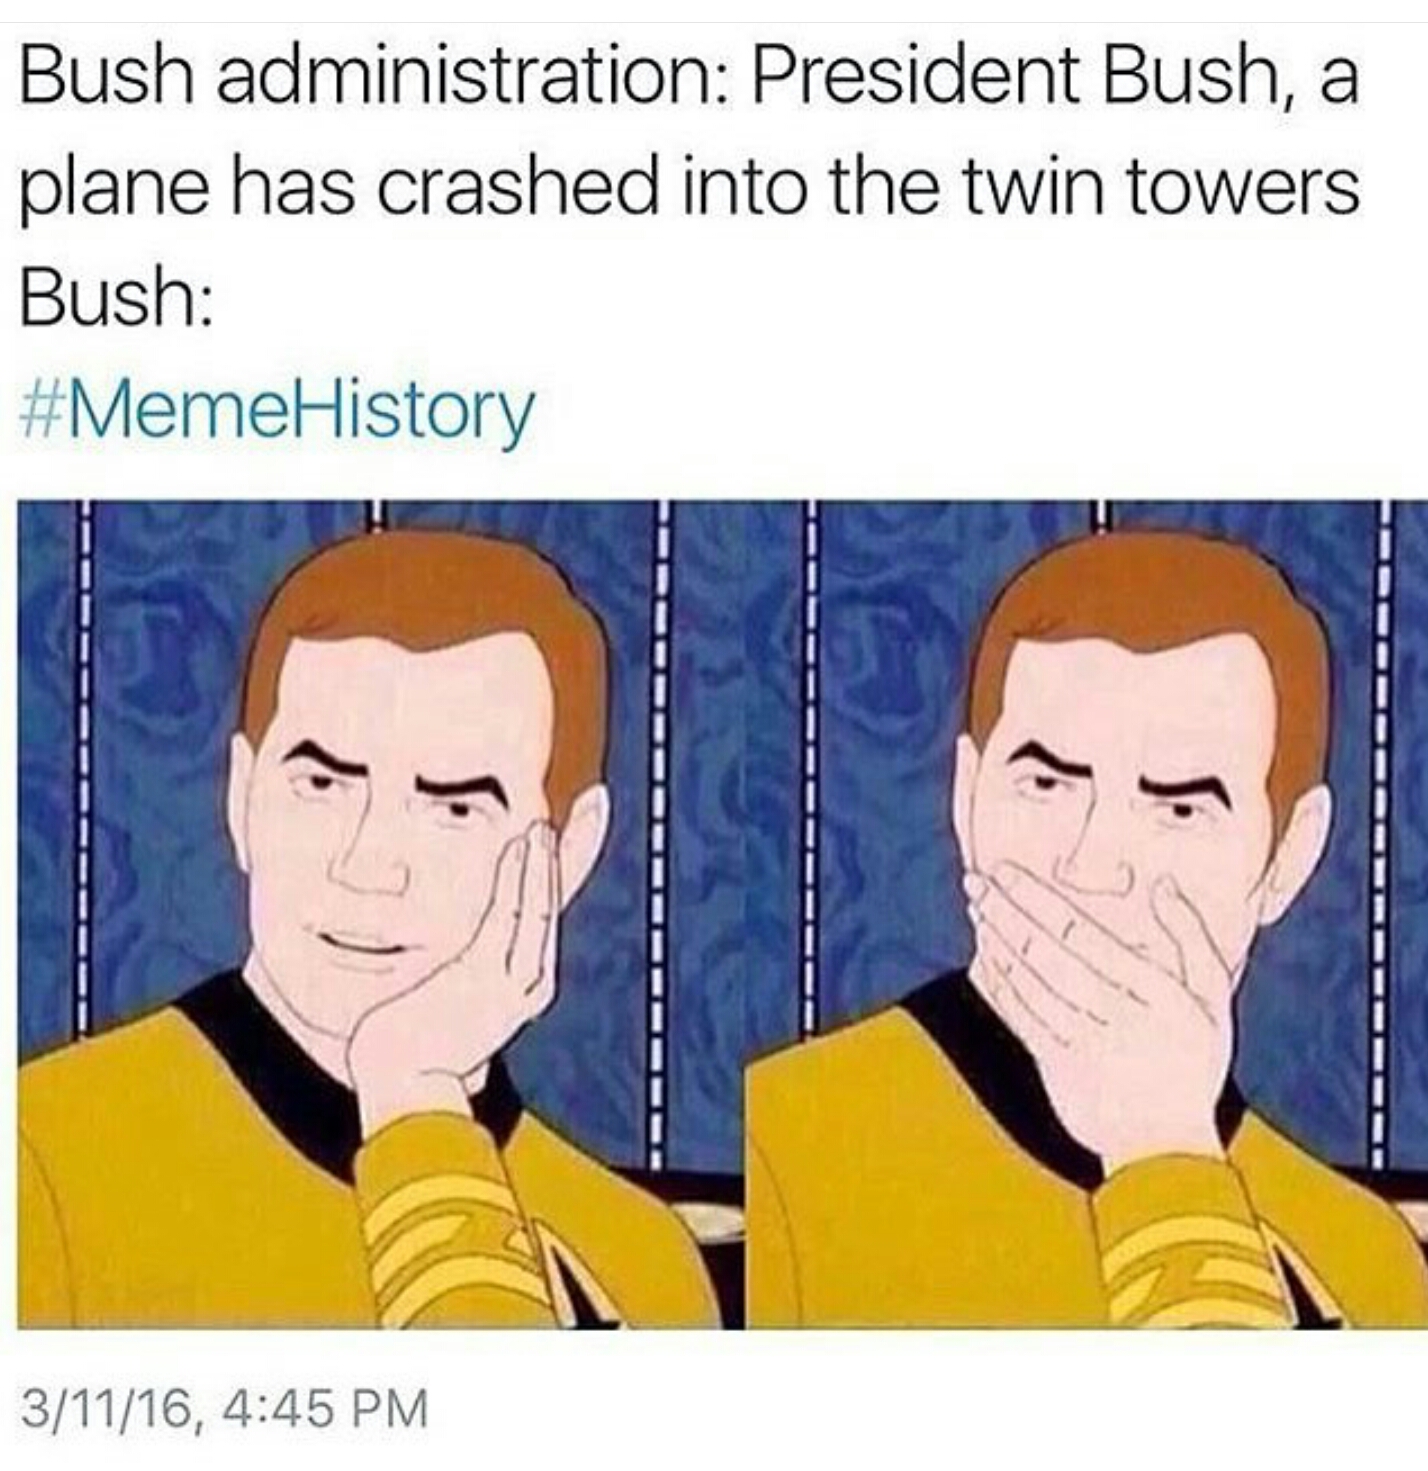 "President Bush, a plane just crashed"